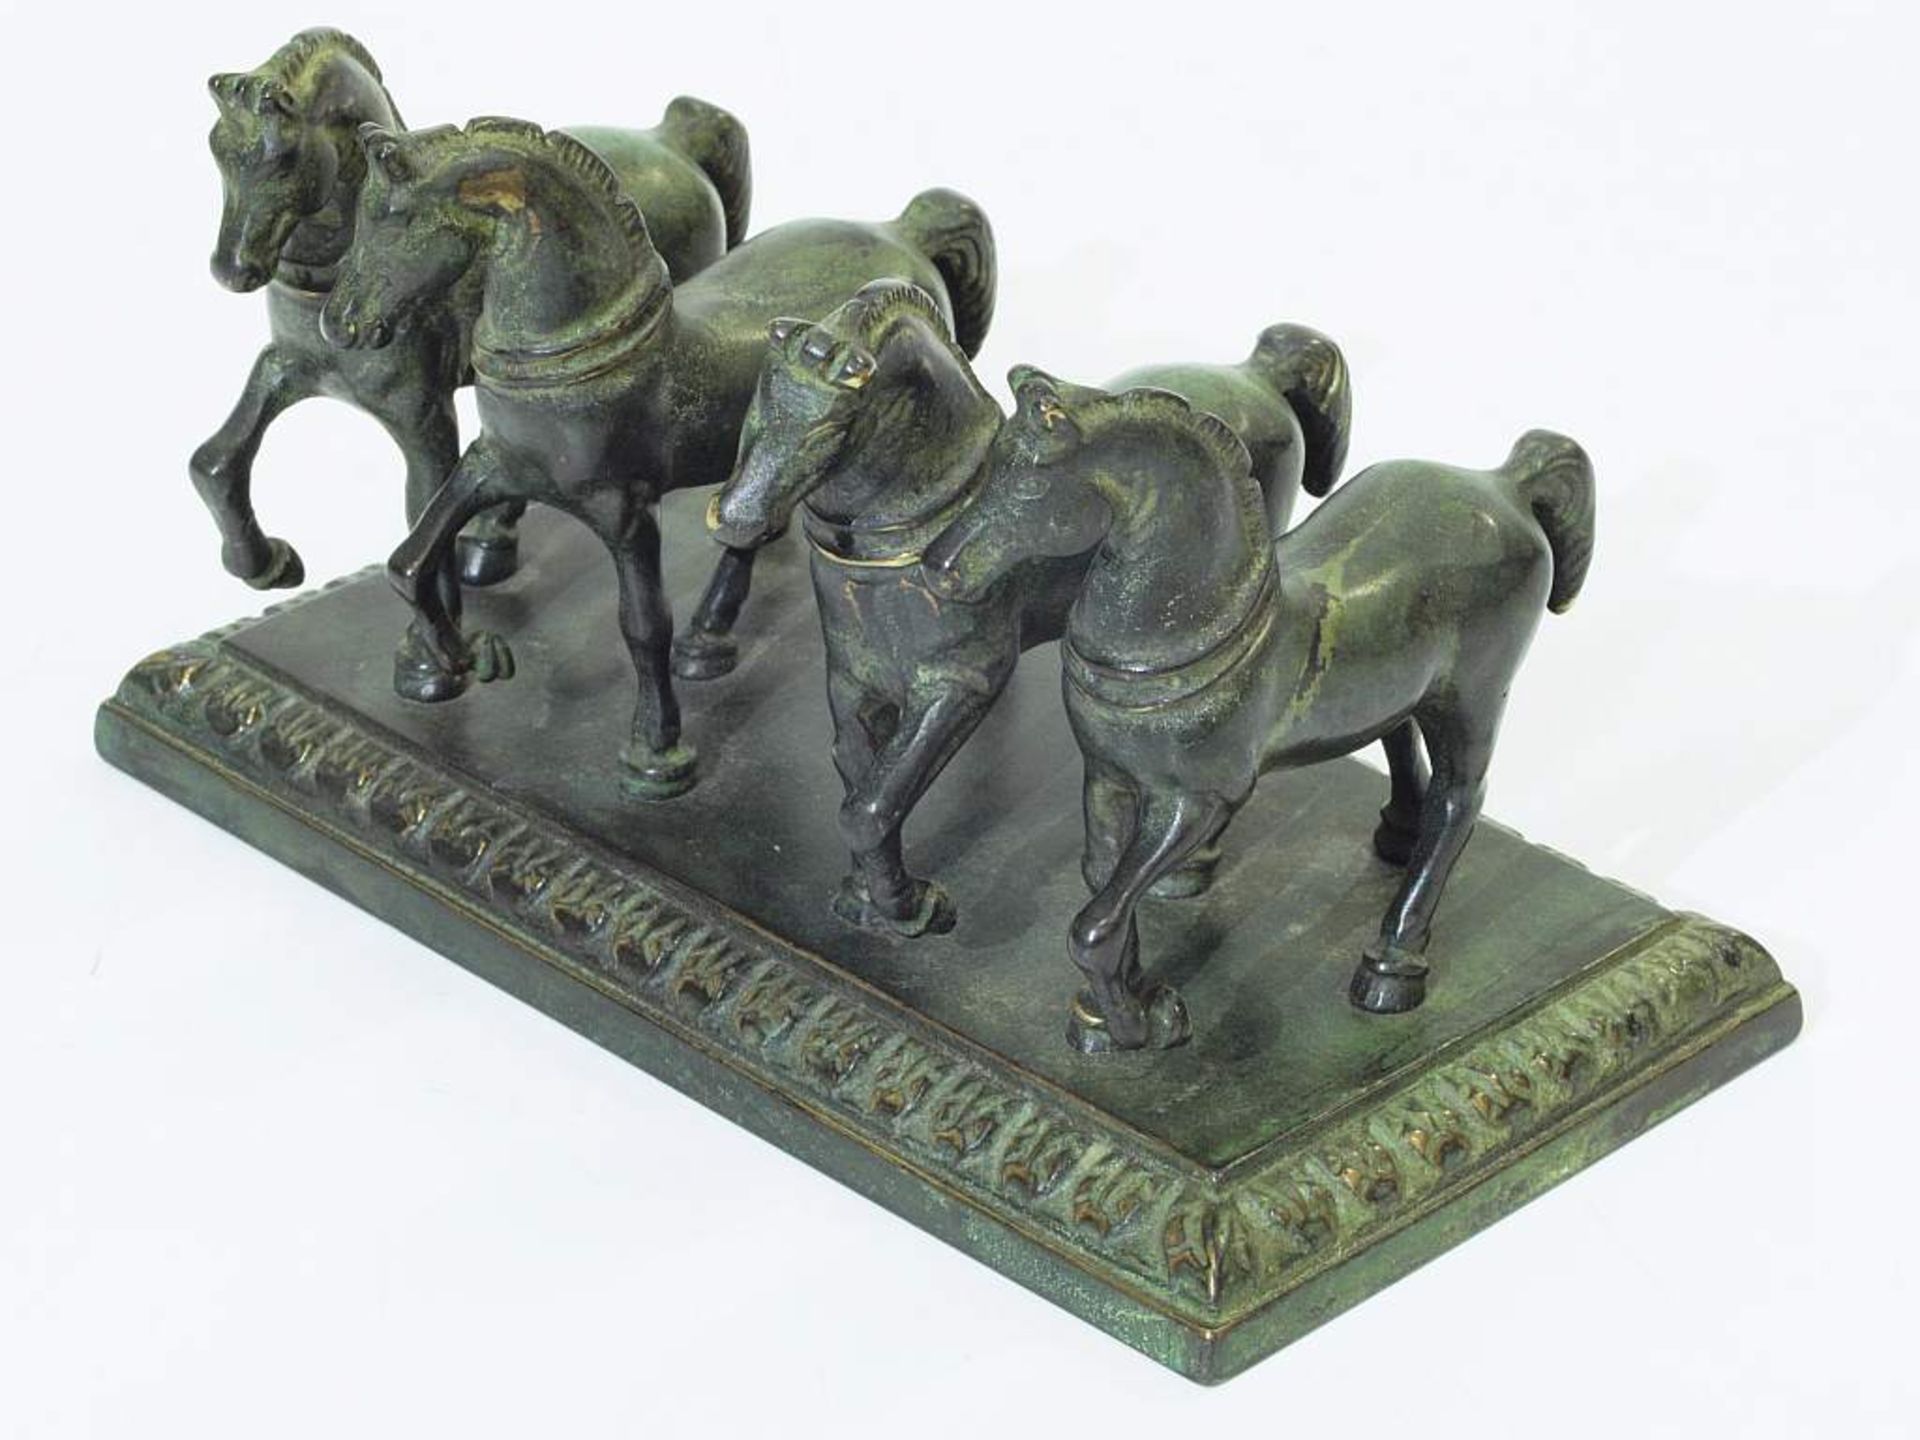 Pferde von San Marco.Pferde von San Marco. 20. Jahrhundert. Wohl Bronze patiniert. Figurengruppe, - Bild 3 aus 7